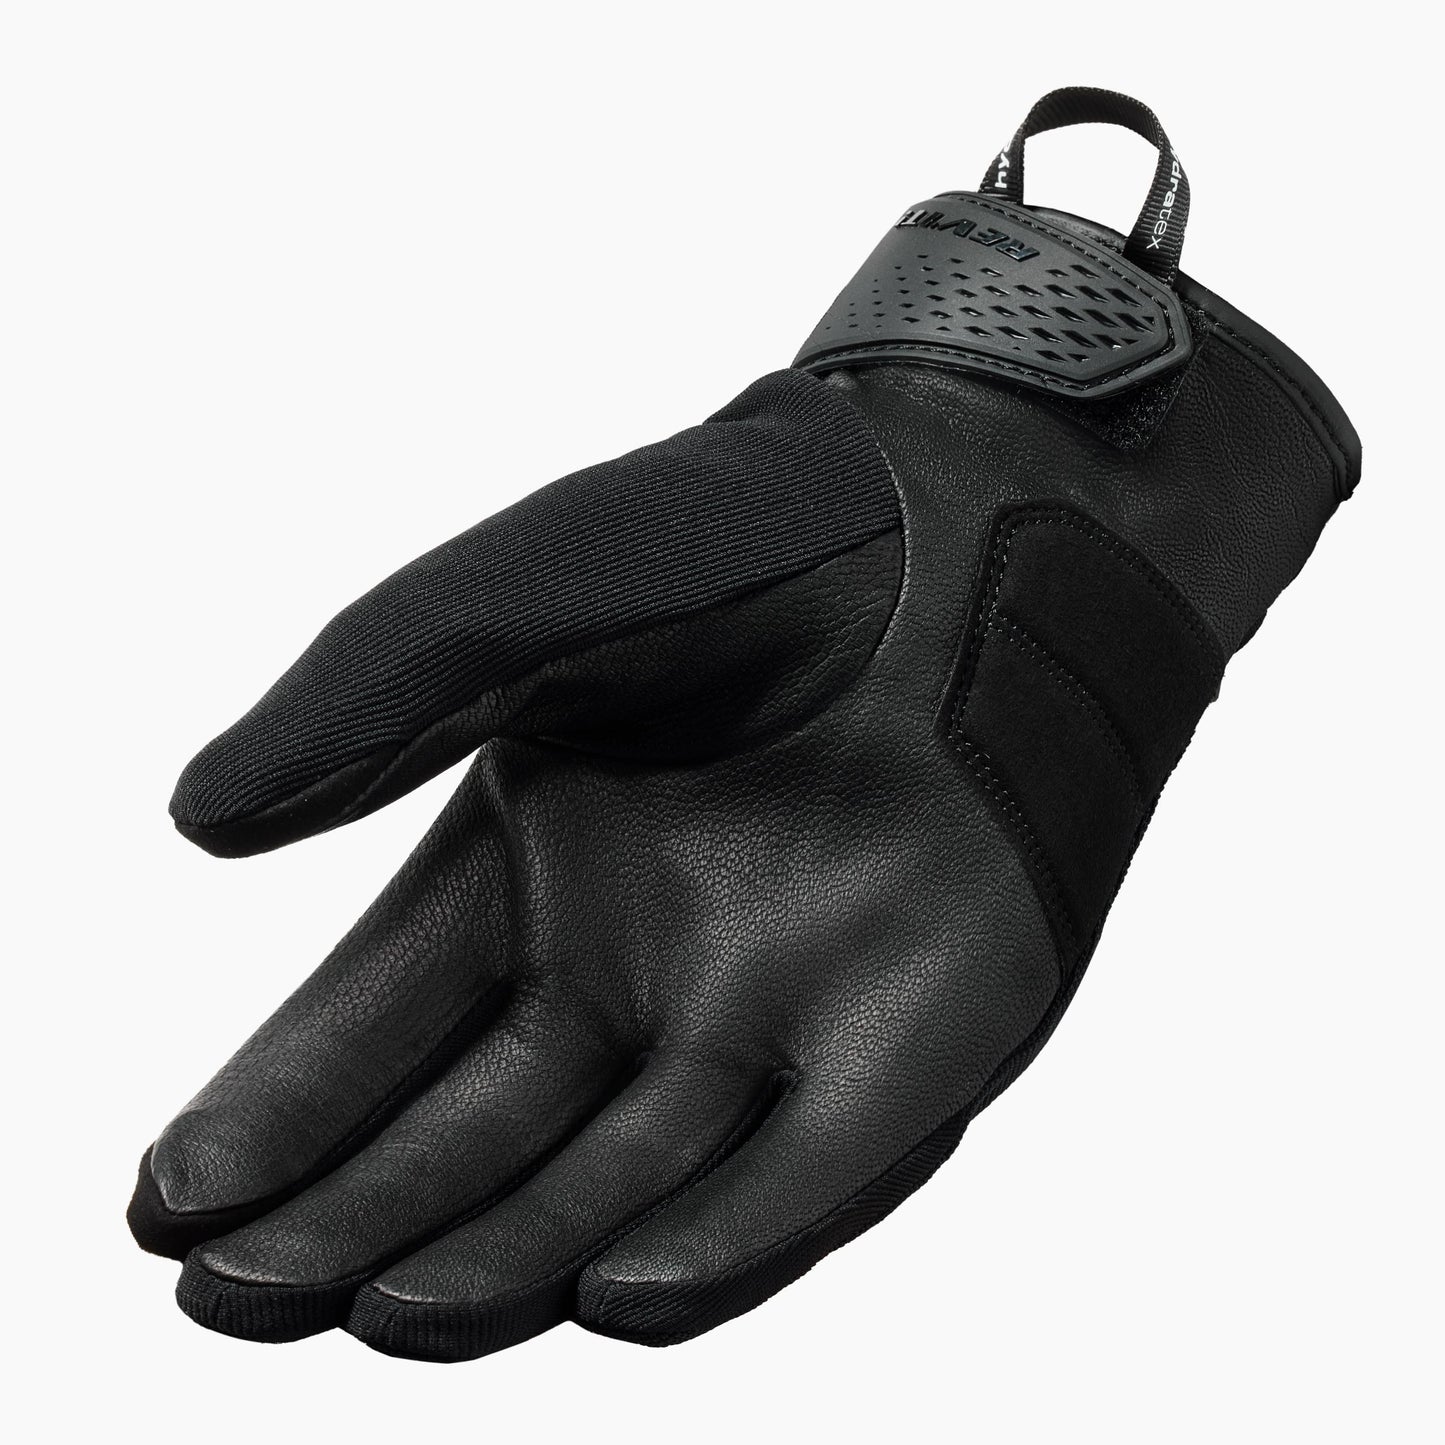 REV'IT Mosca 2 H2O Gloves